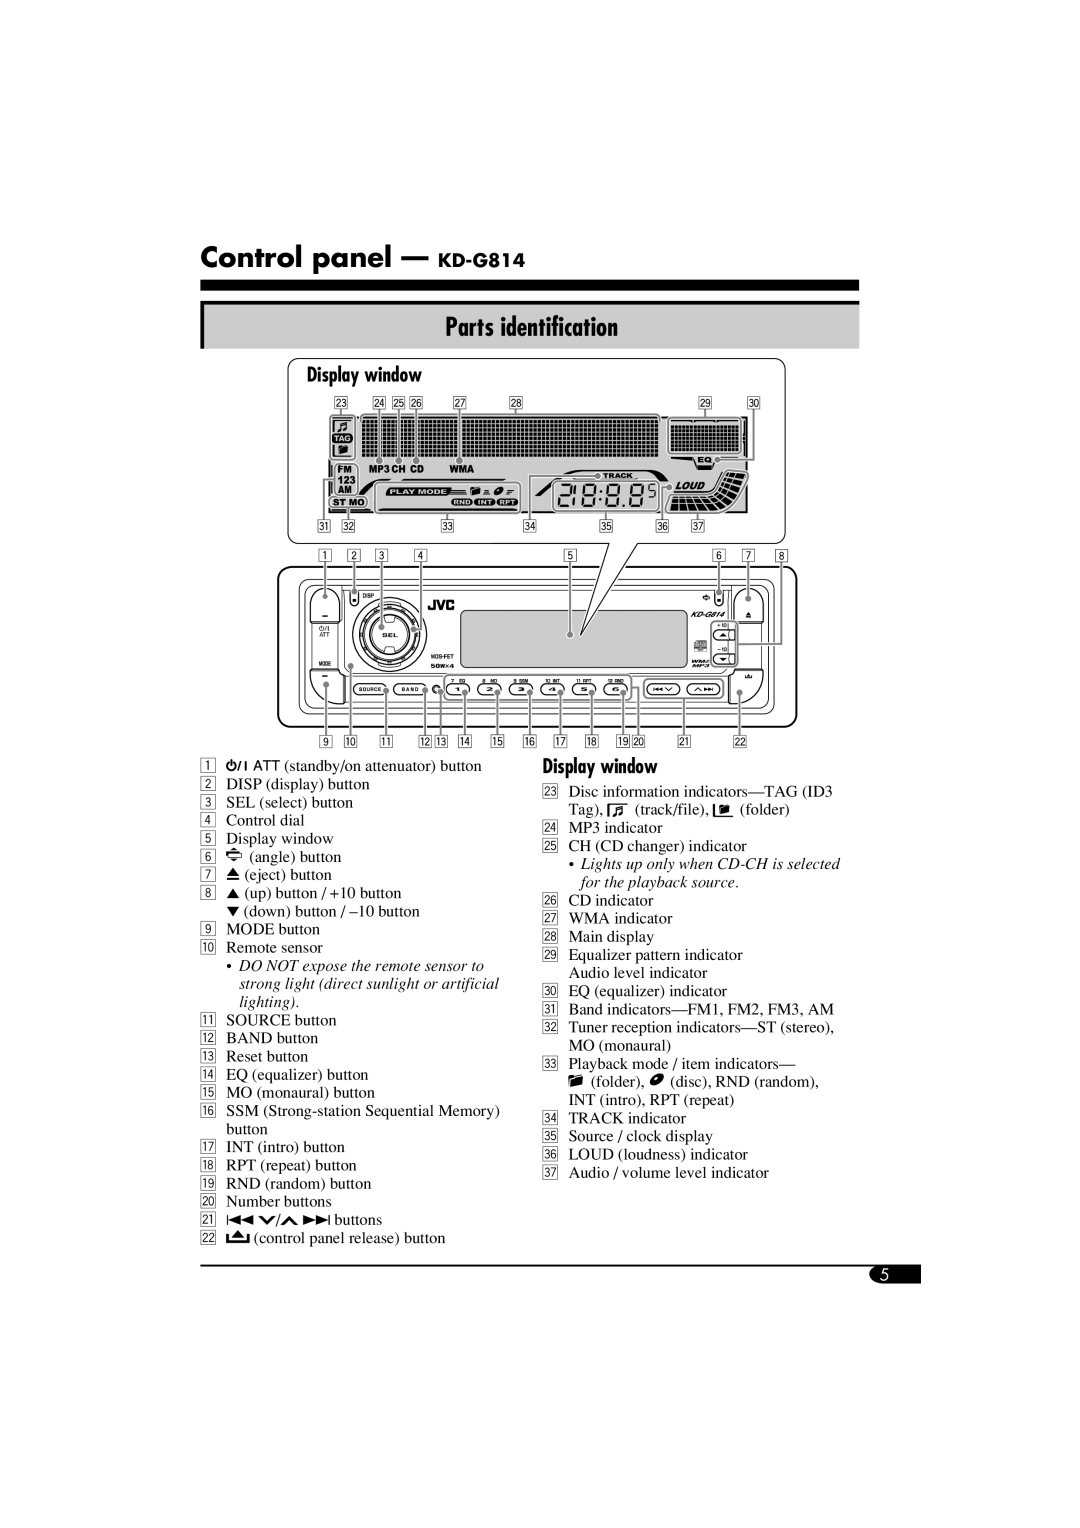 JVC manual Control panel - KD-G814, Parts identification, Display window 